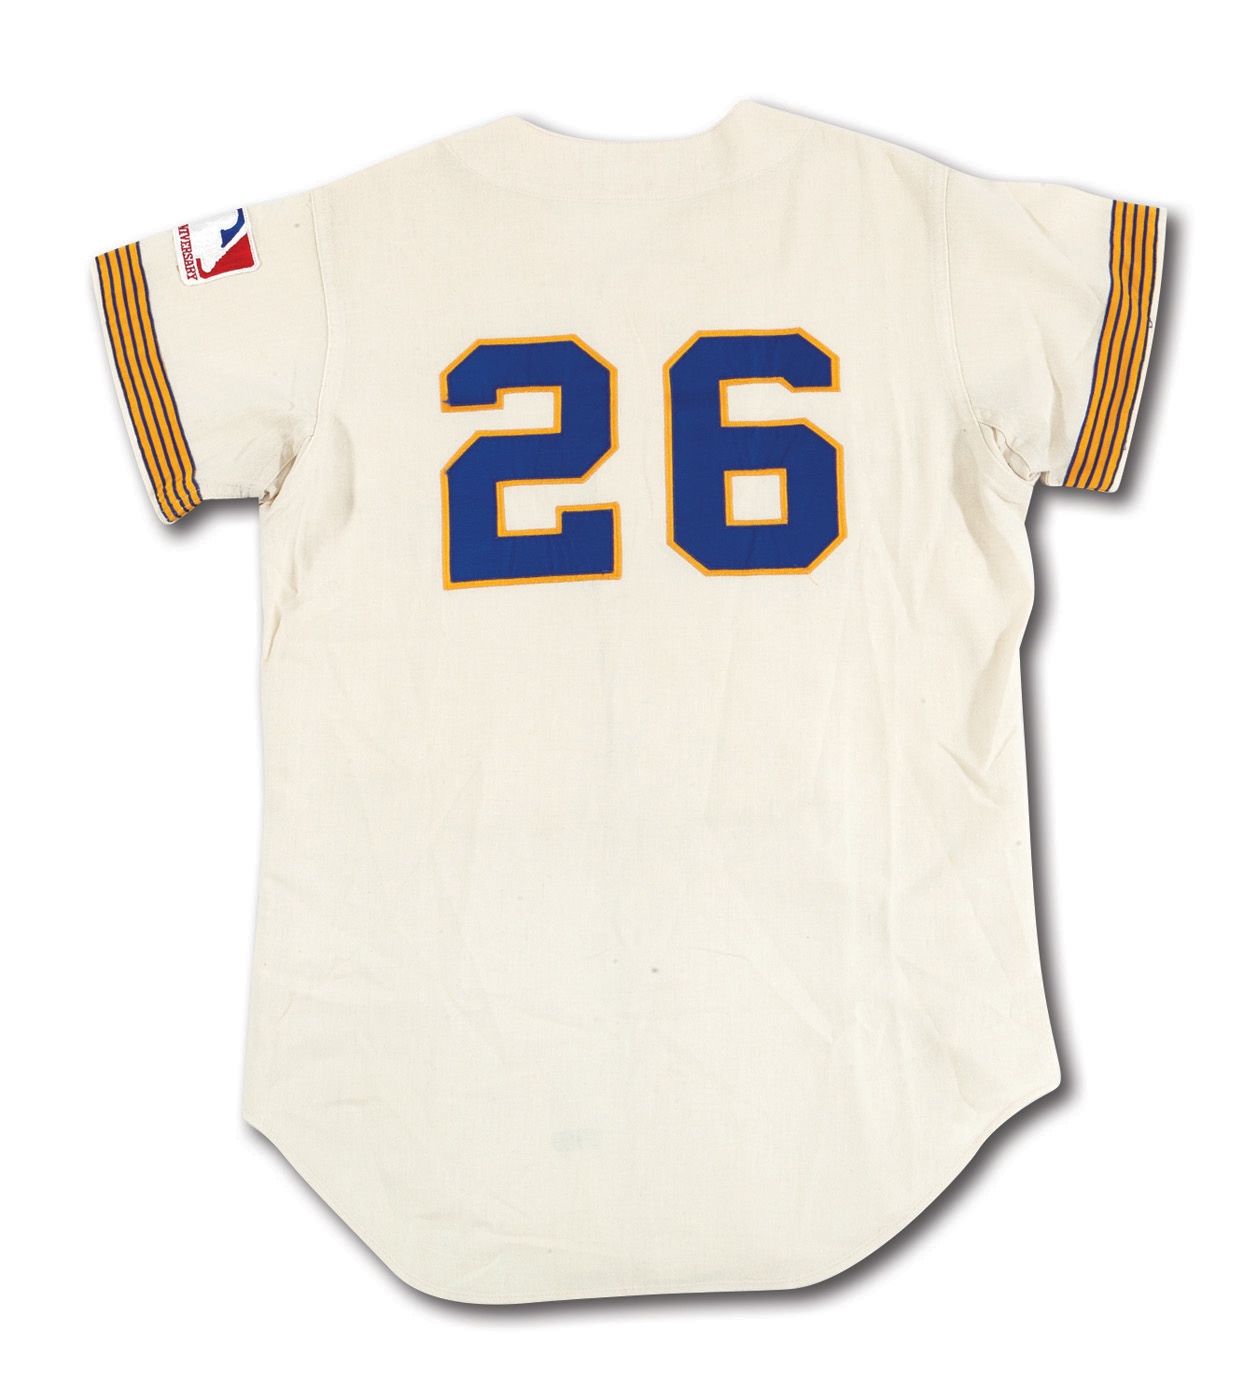 1969 Seattle Pilots Original & Unrestored Full Uniform. Baseball, Lot  #80459